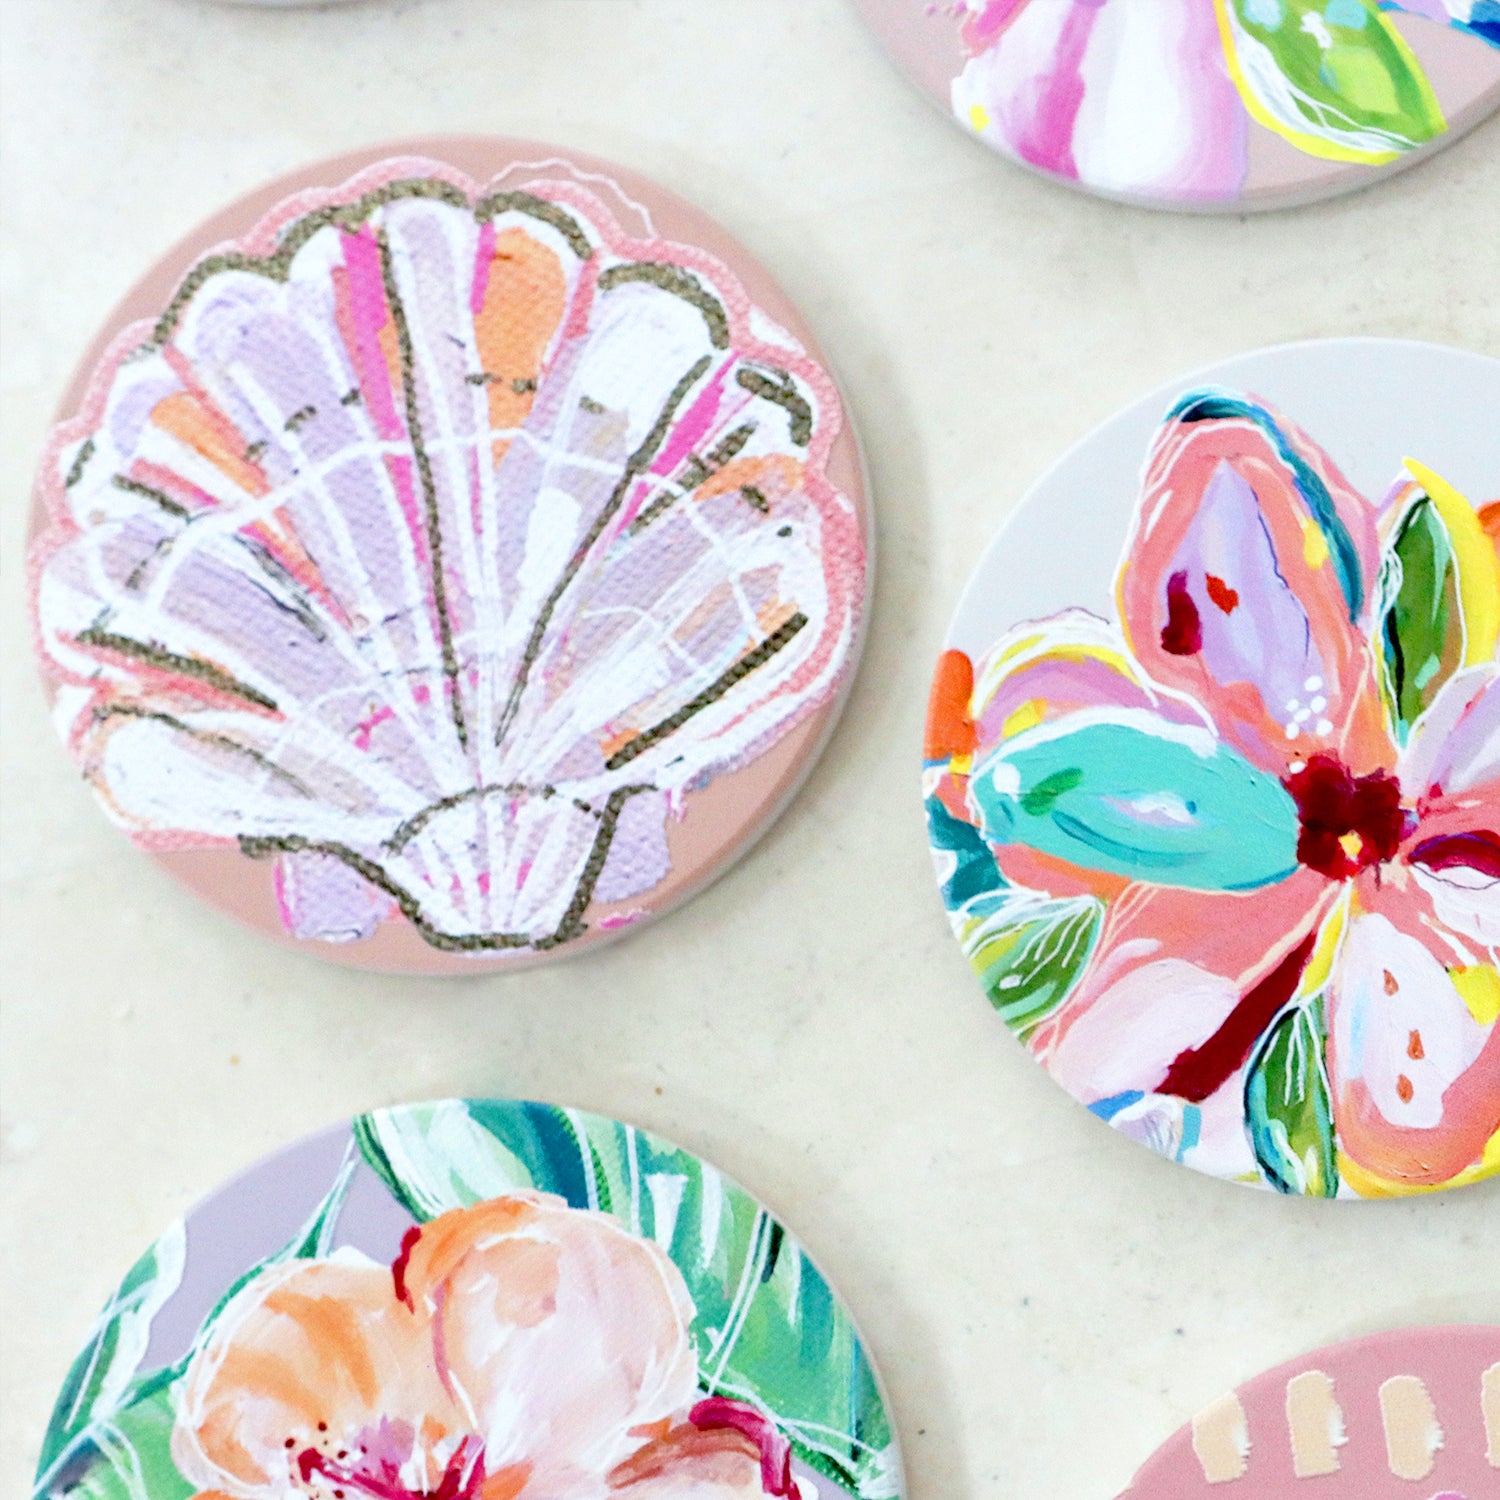 Splosh - Talulah - Ceramic Coaster - Shell